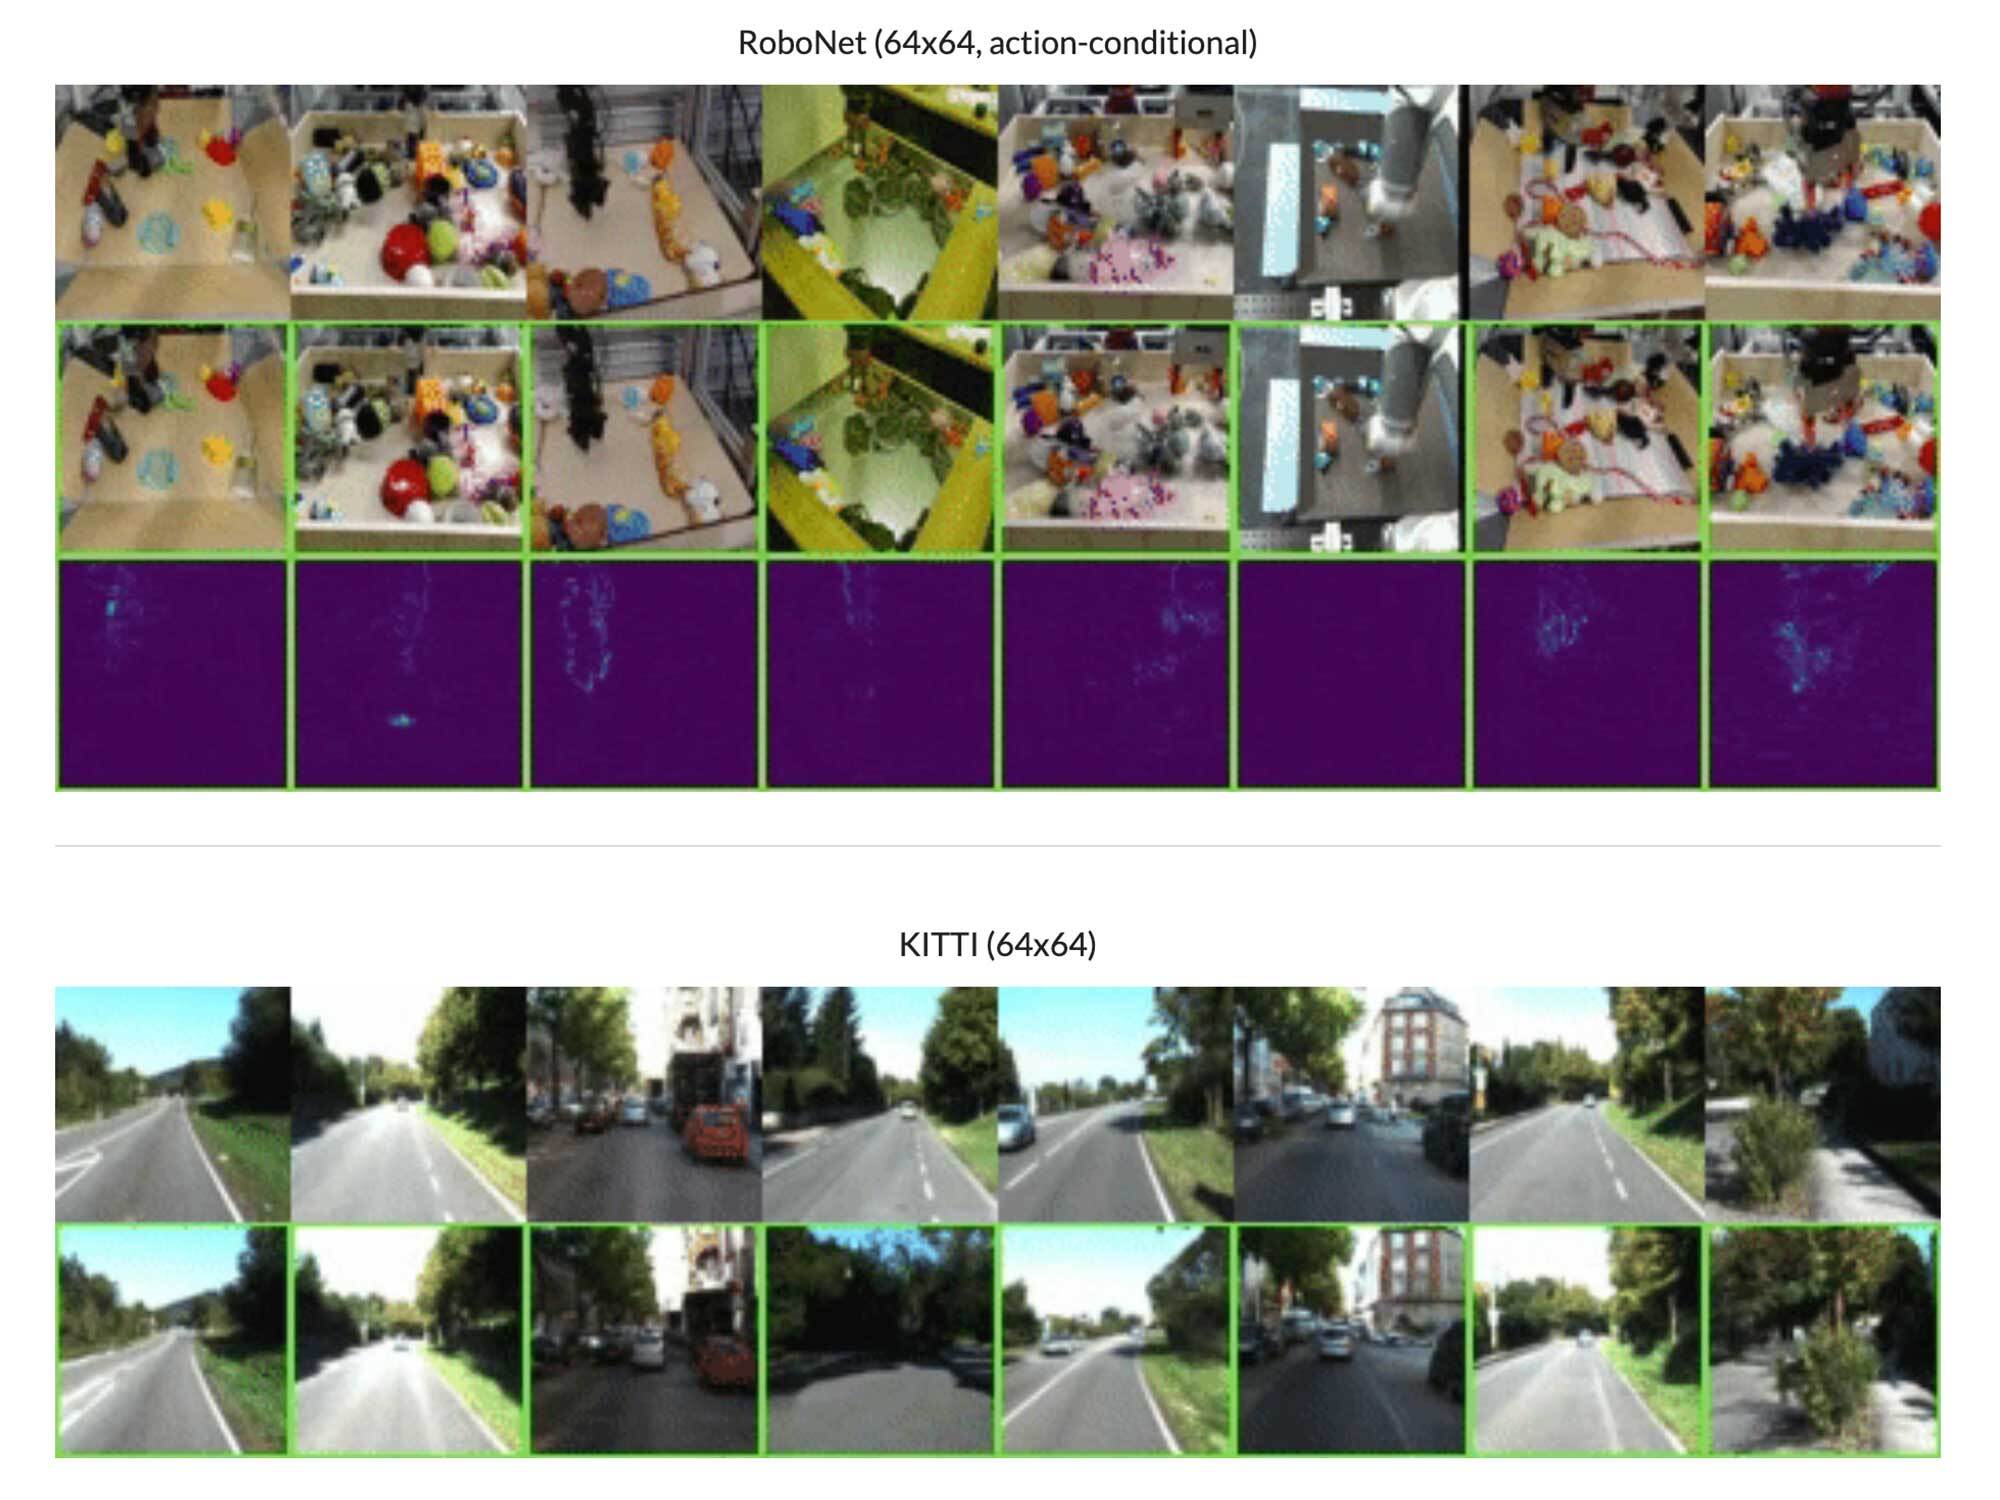 Google’s DeepMind AI can ‘transframe’ a single image into a video